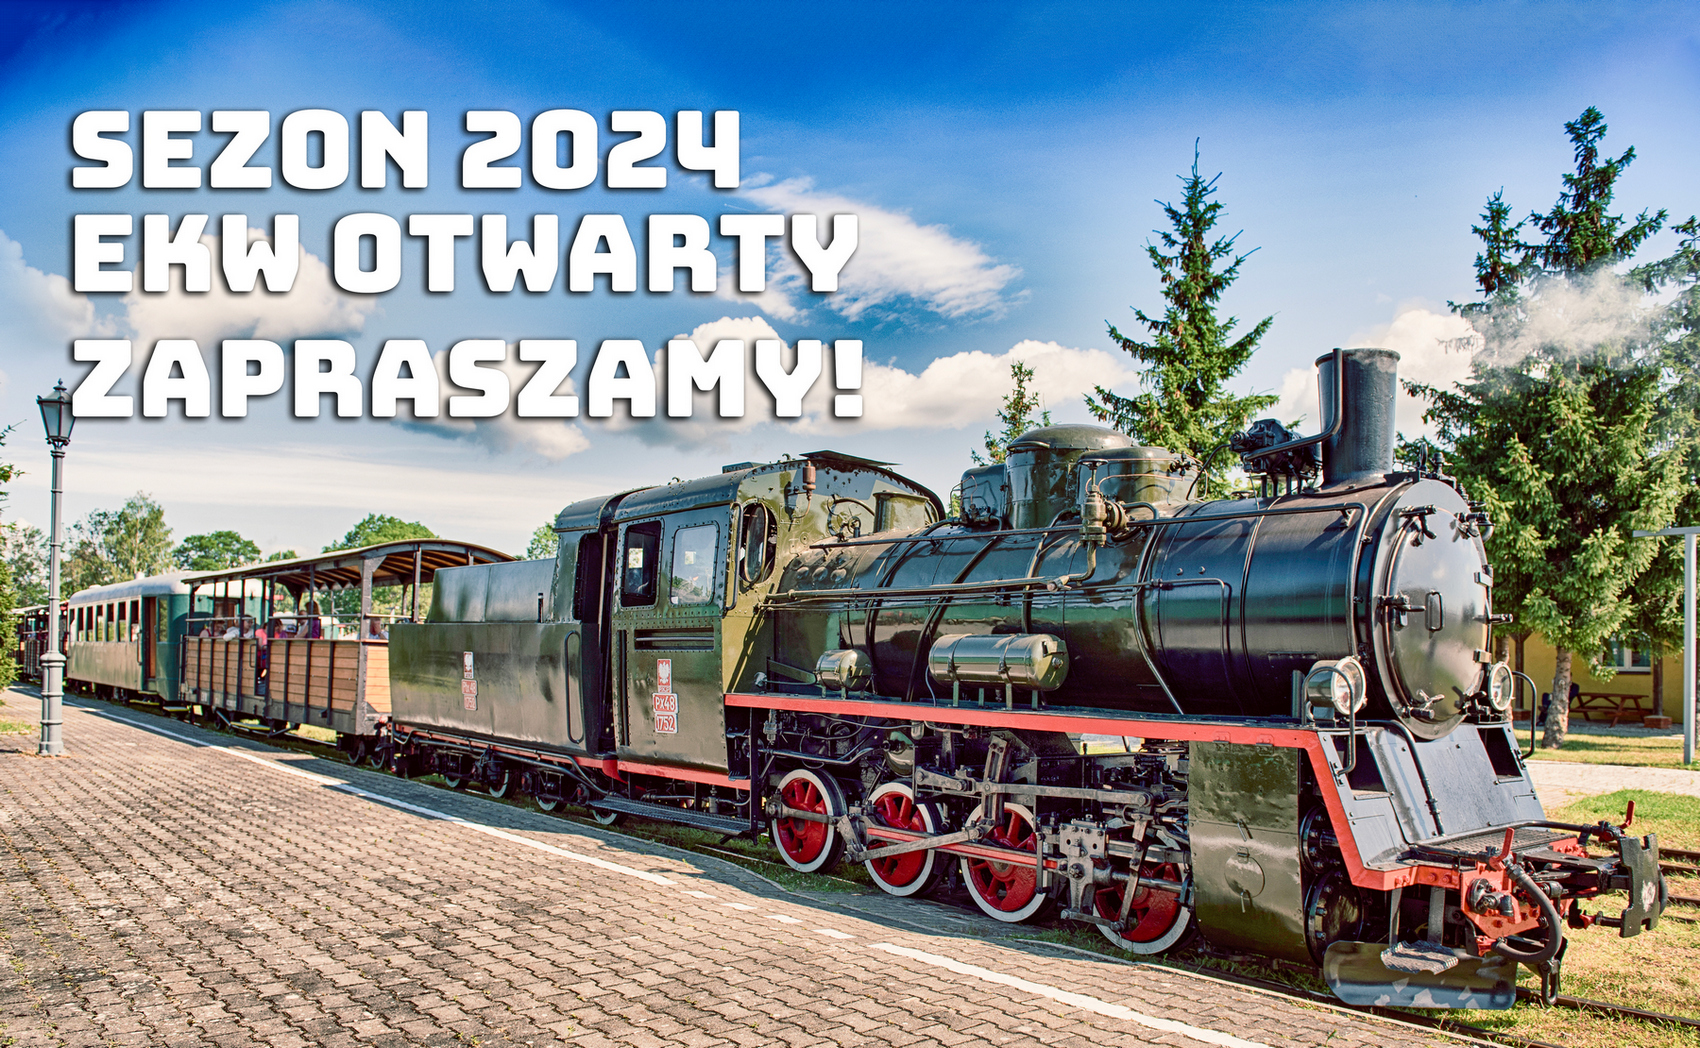 The 2024 season of the Ełk Narrow Gauge Railway starts